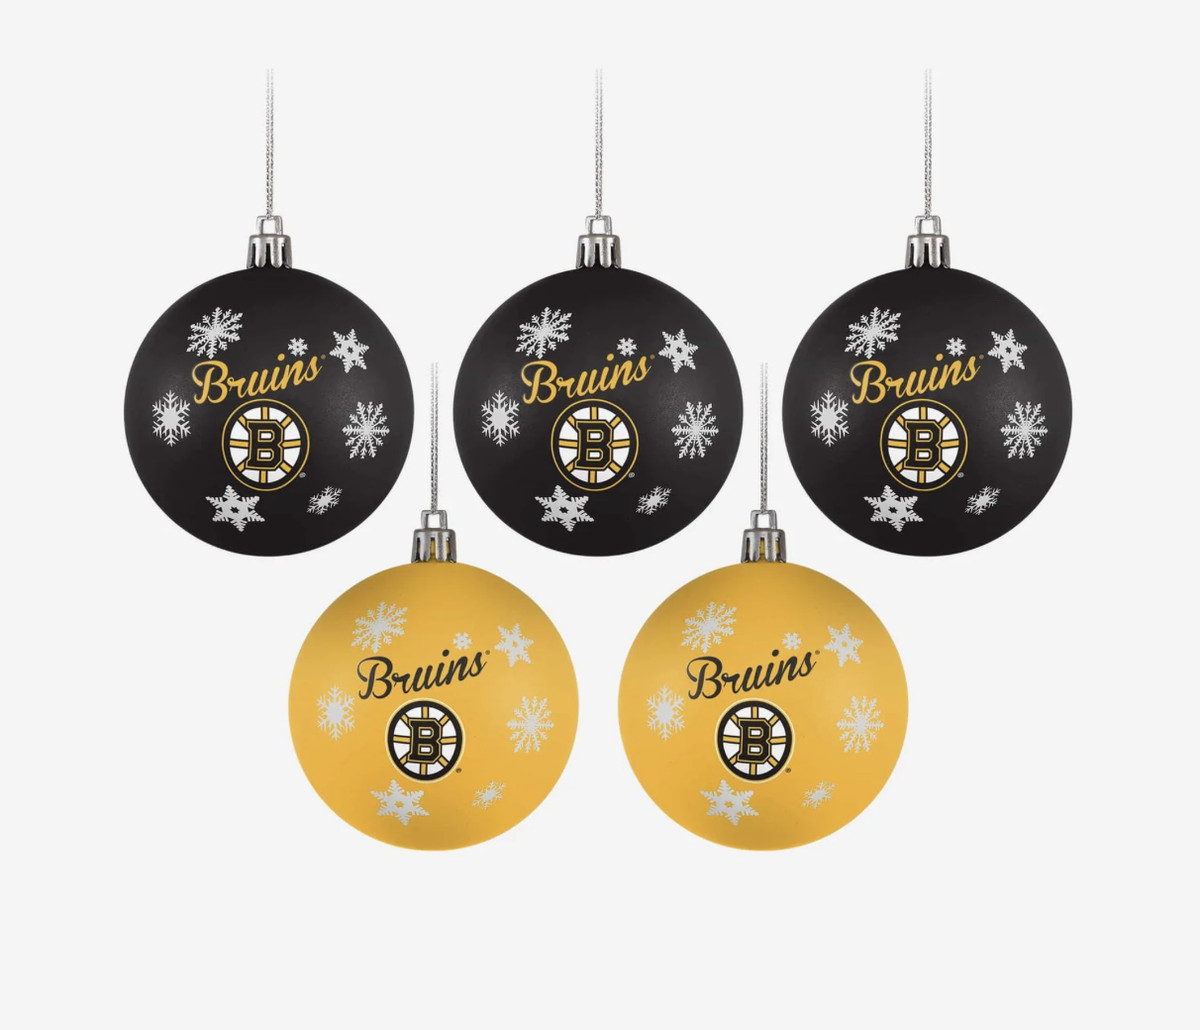 bruins-themed Christmas tree ornaments